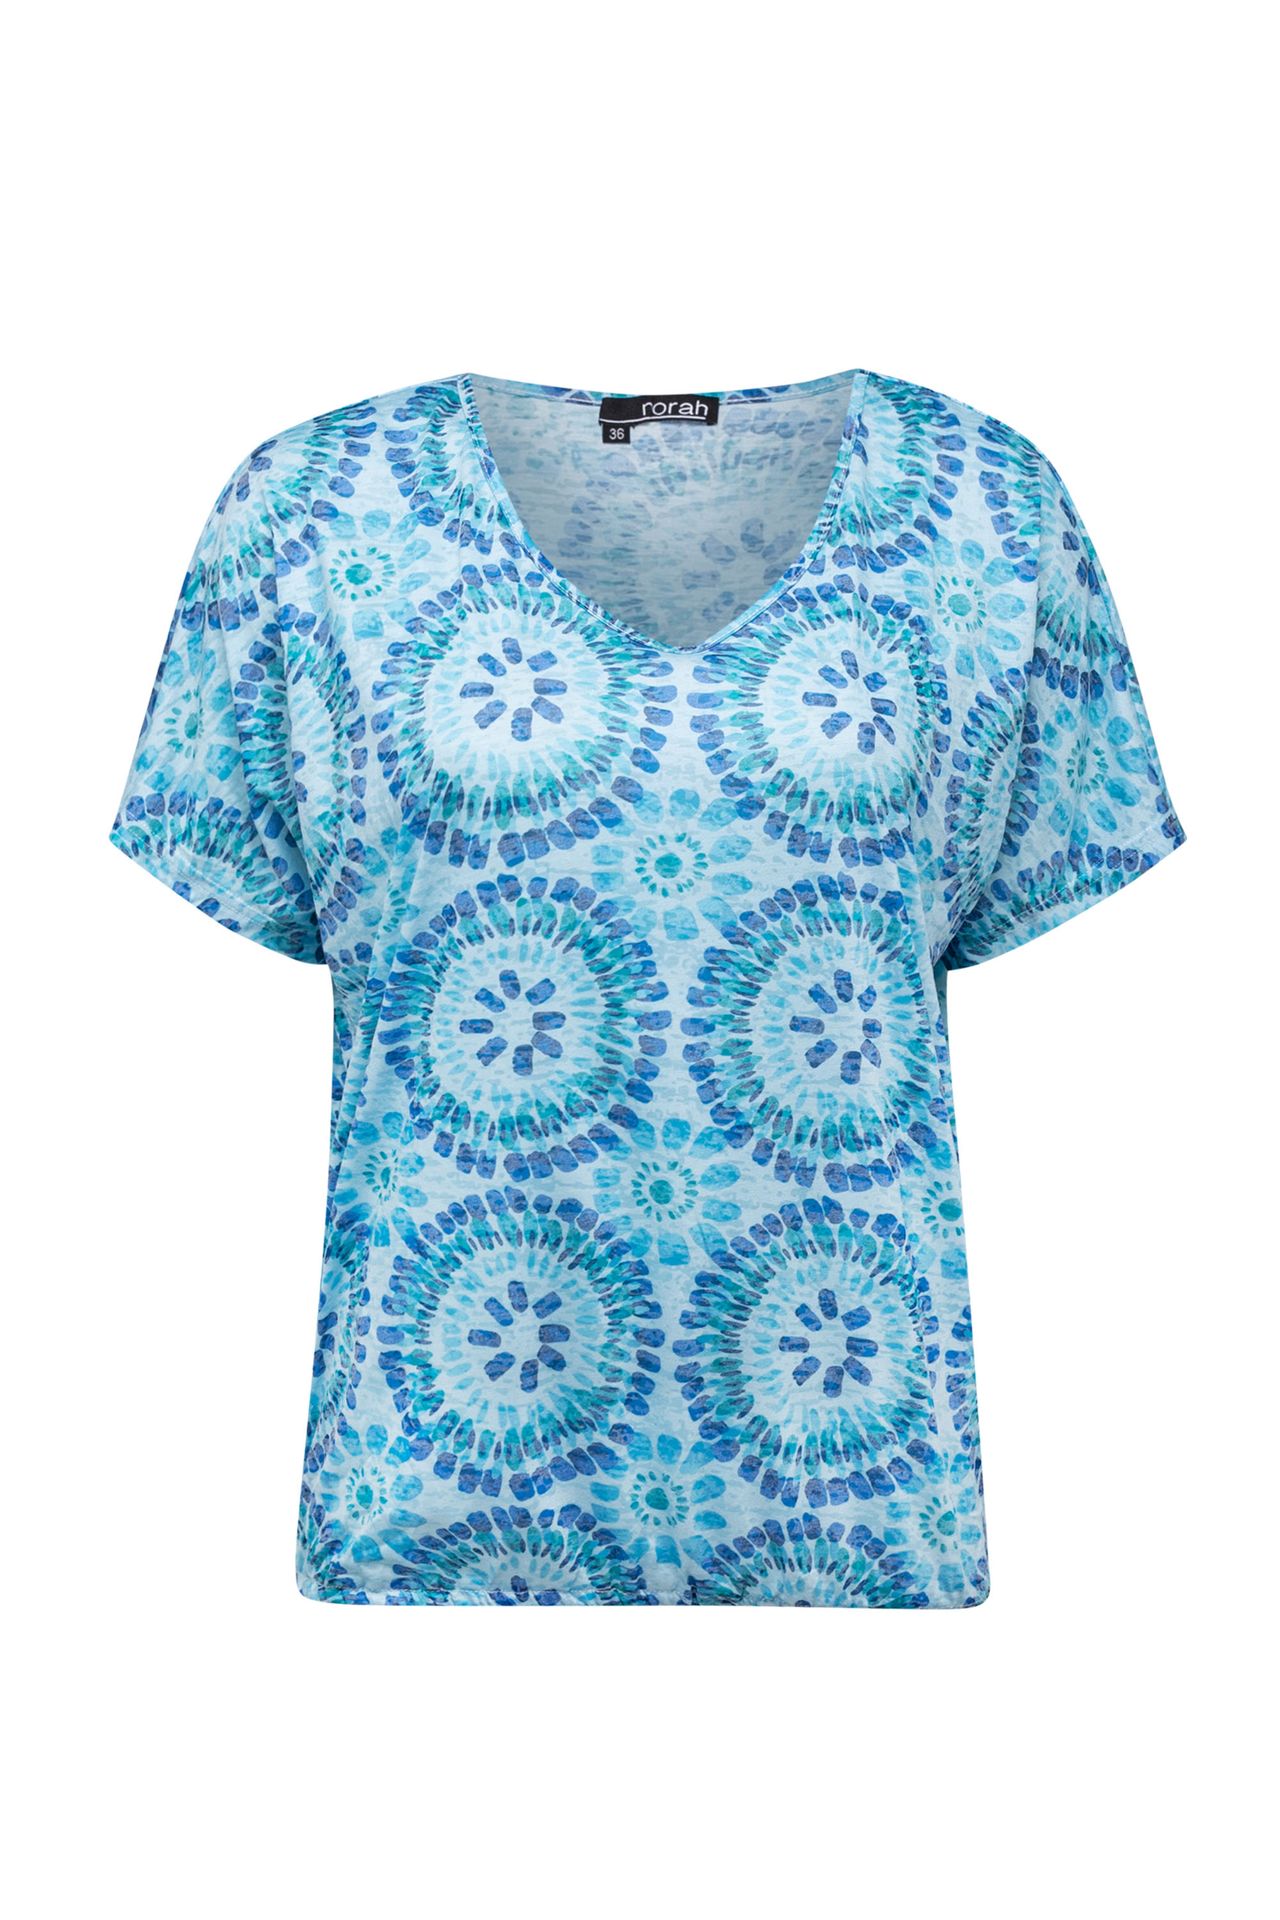 Norah Blauw shirt blue multicolor 213831-420